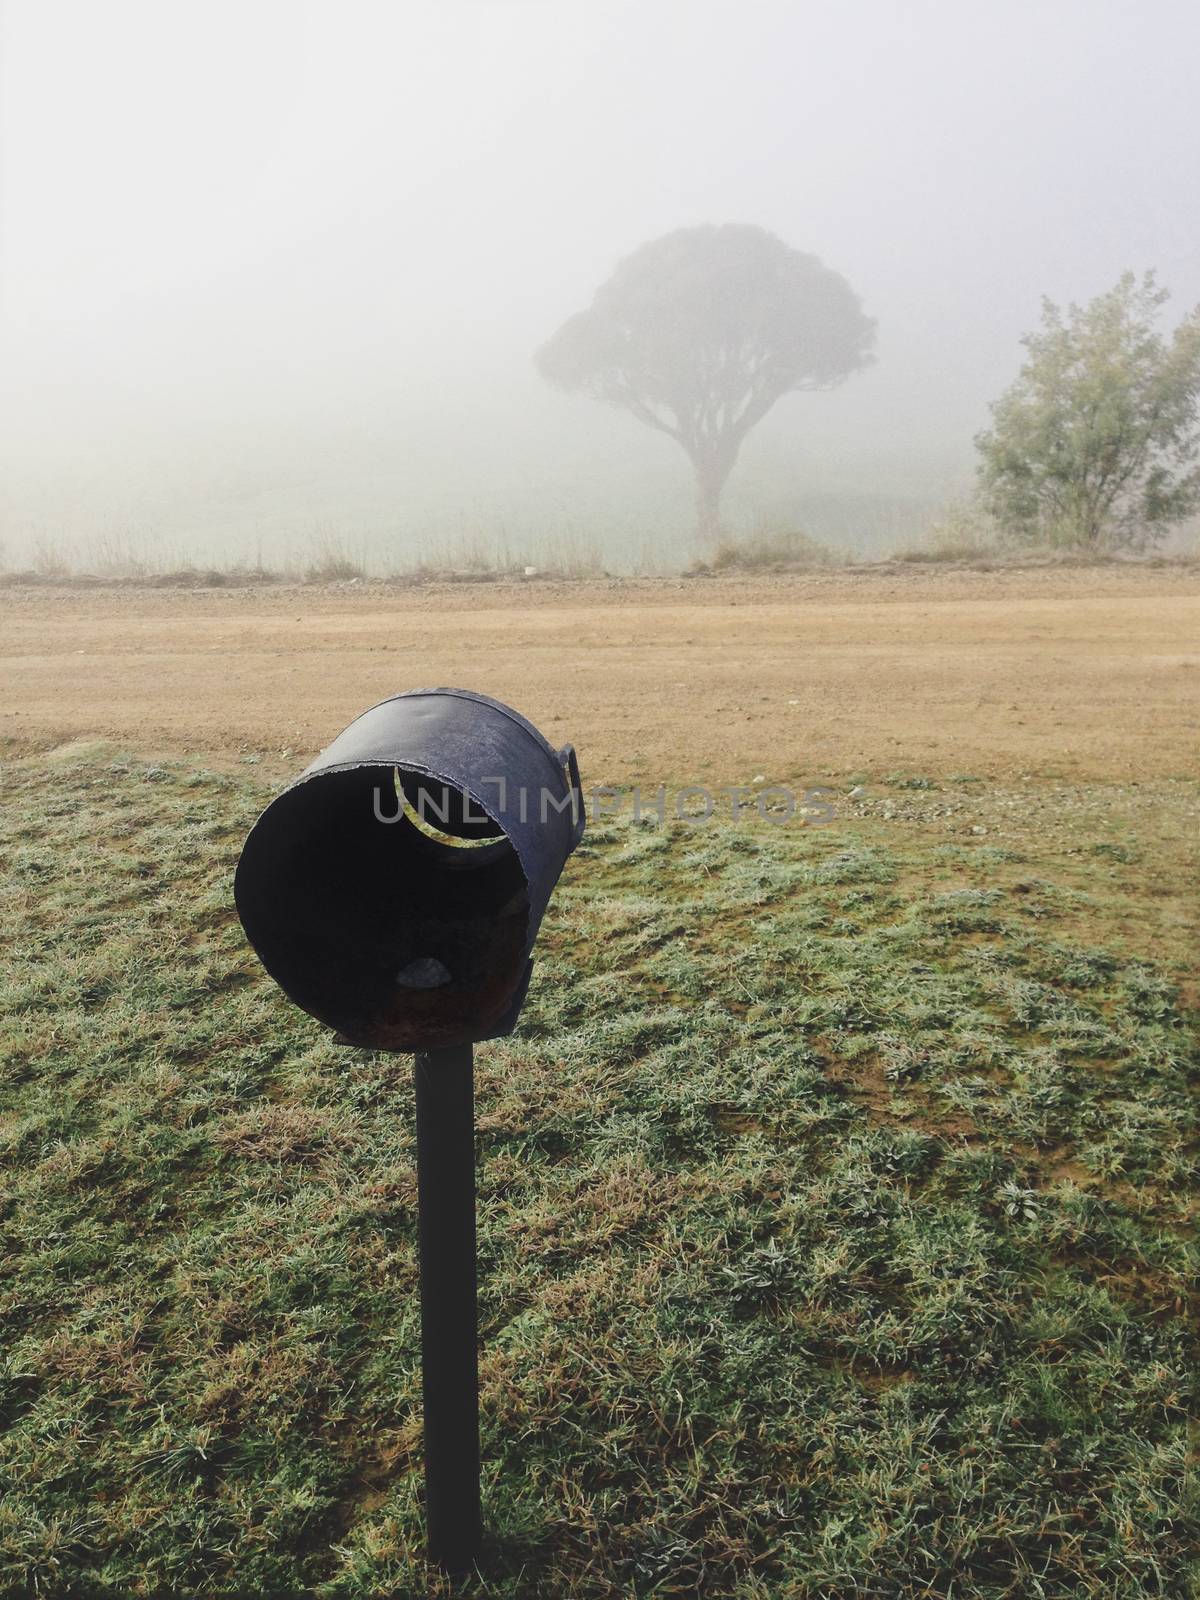 Foggy morning rural Australia by lovleah